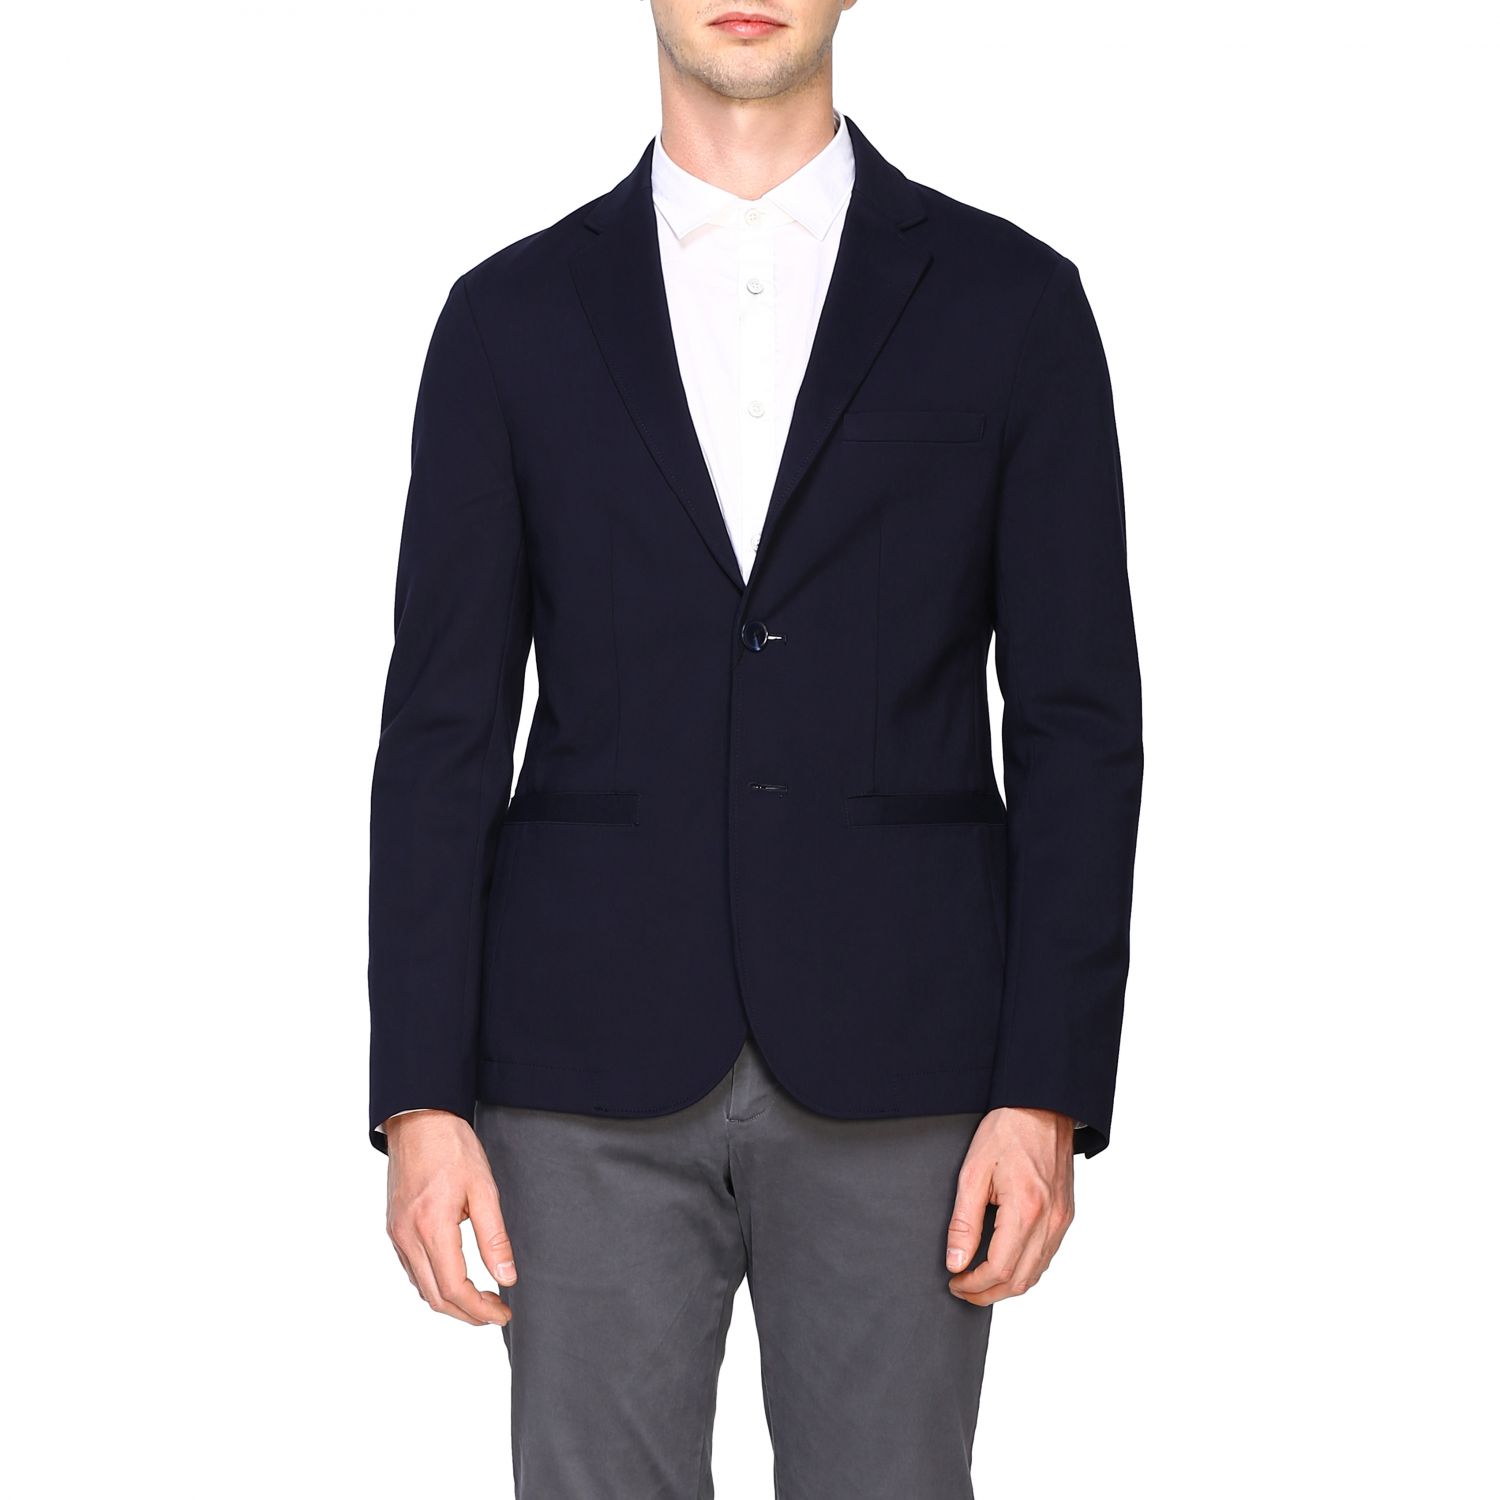 Armani Exchange Outlet: blazer for men - Blue | Armani Exchange blazer ...